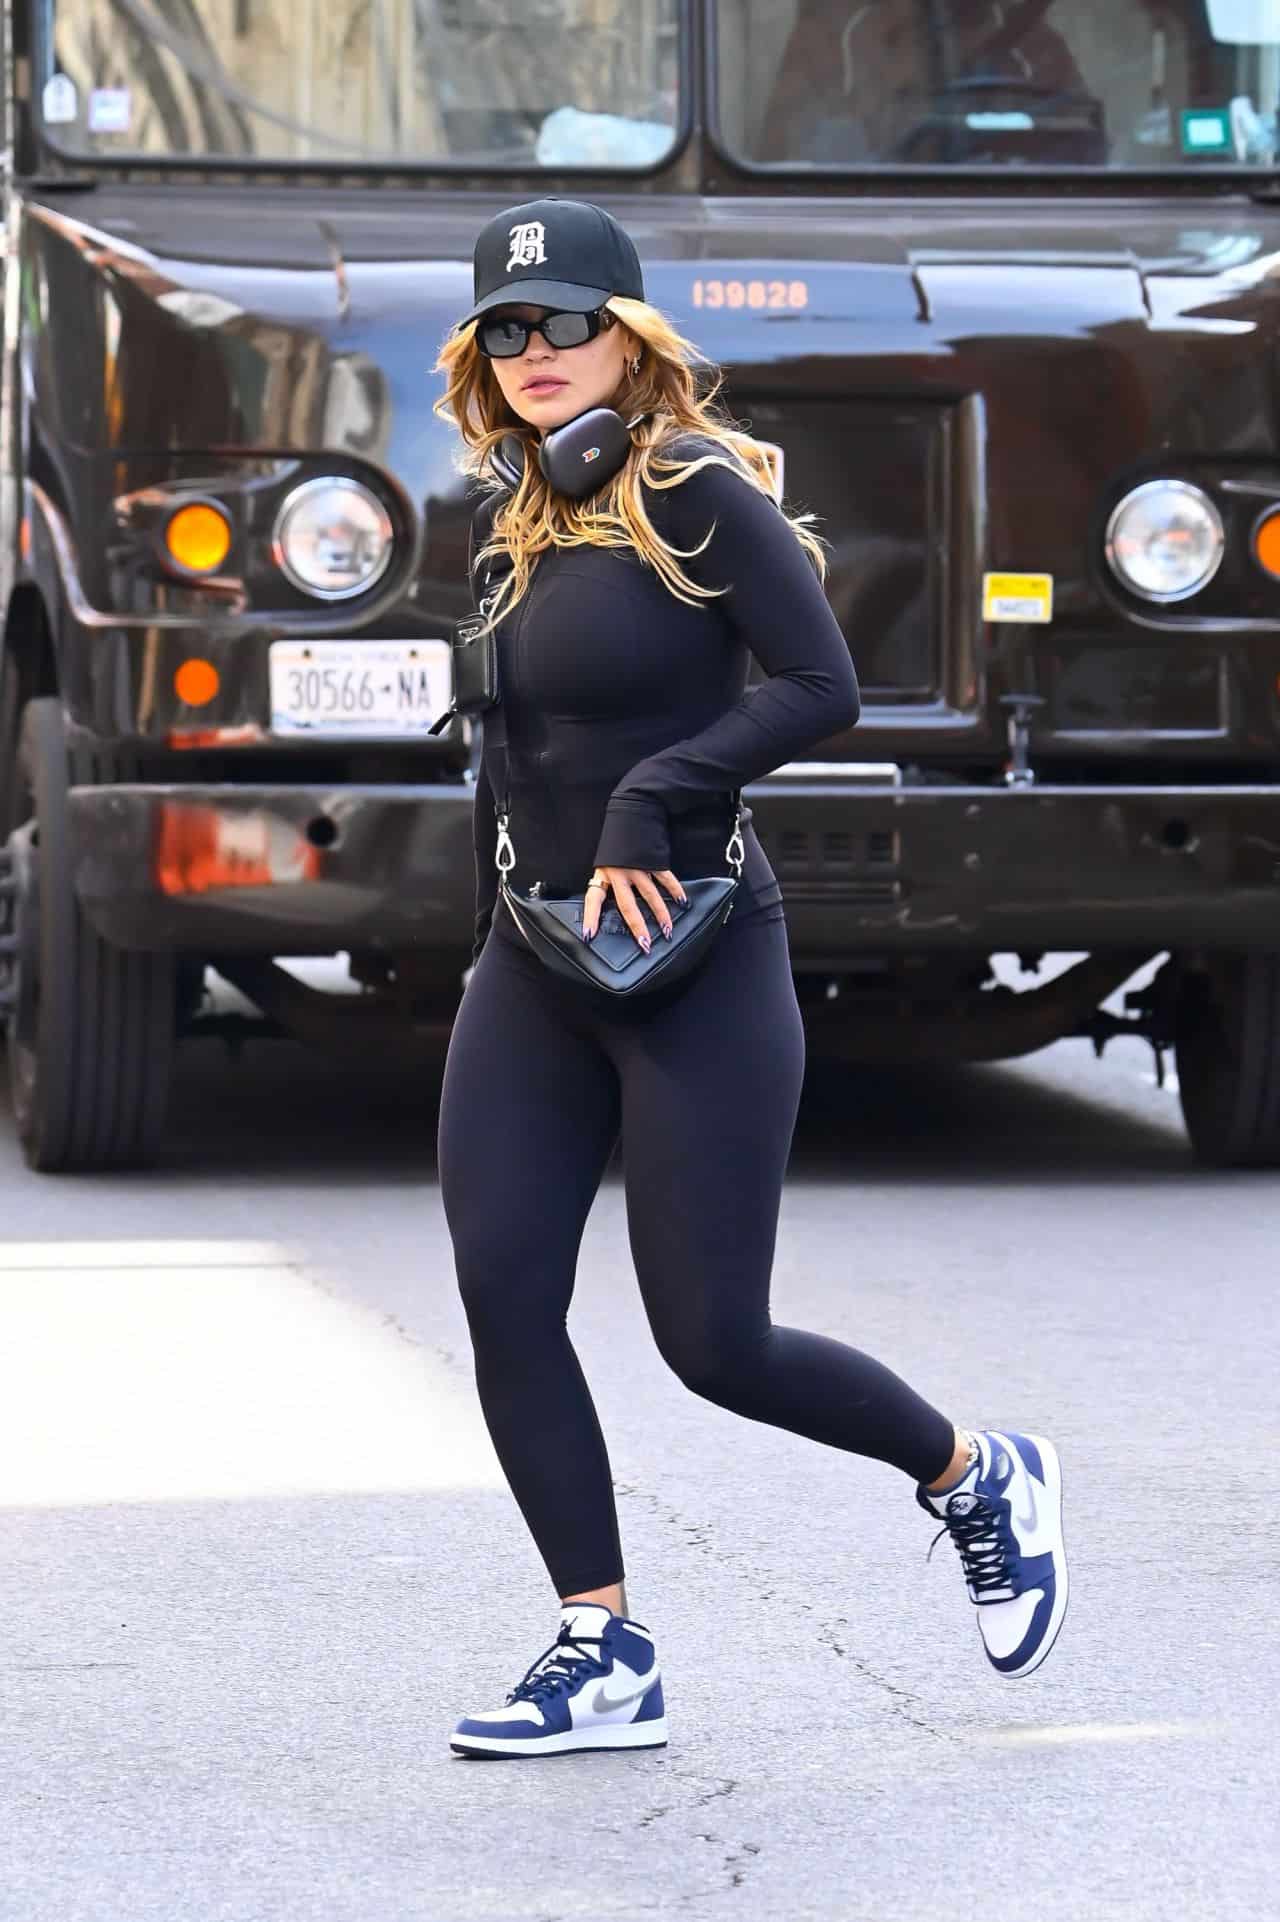 Rita Ora Looks Awesome in Black Tight Workout Gear and Prada Bag in NYC